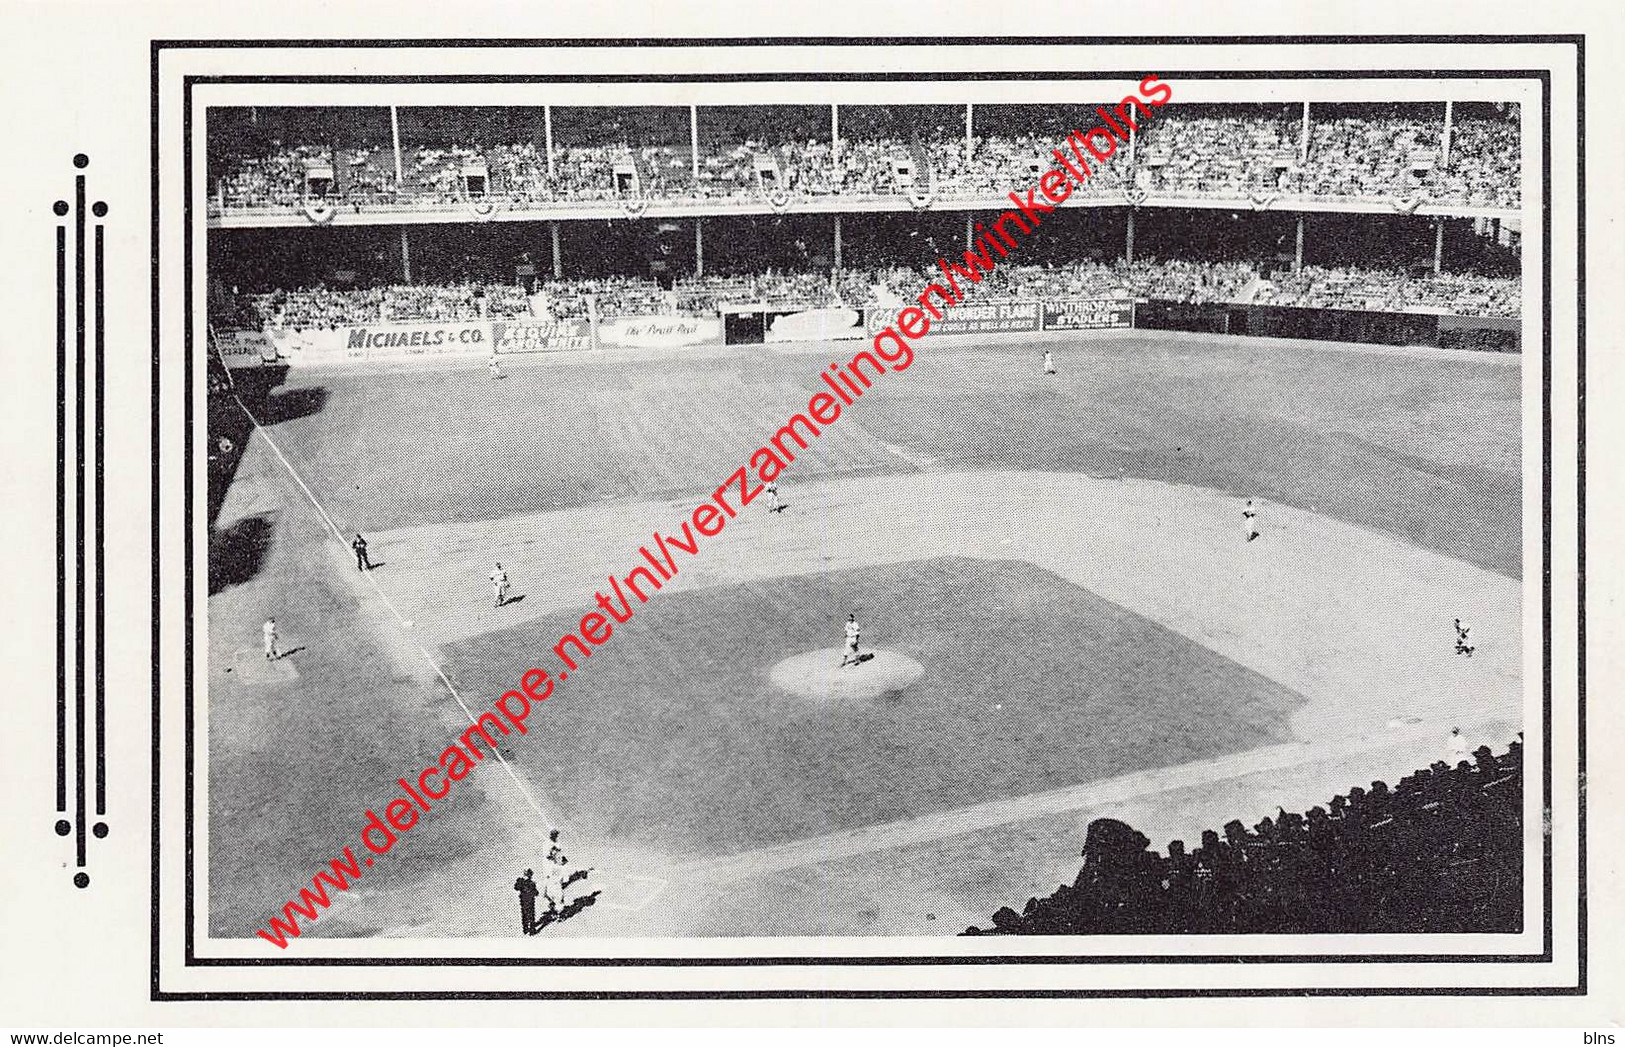 Ebbets Field - Baseball - Brooklyn Dodgers - New York - United States USA - Brooklyn